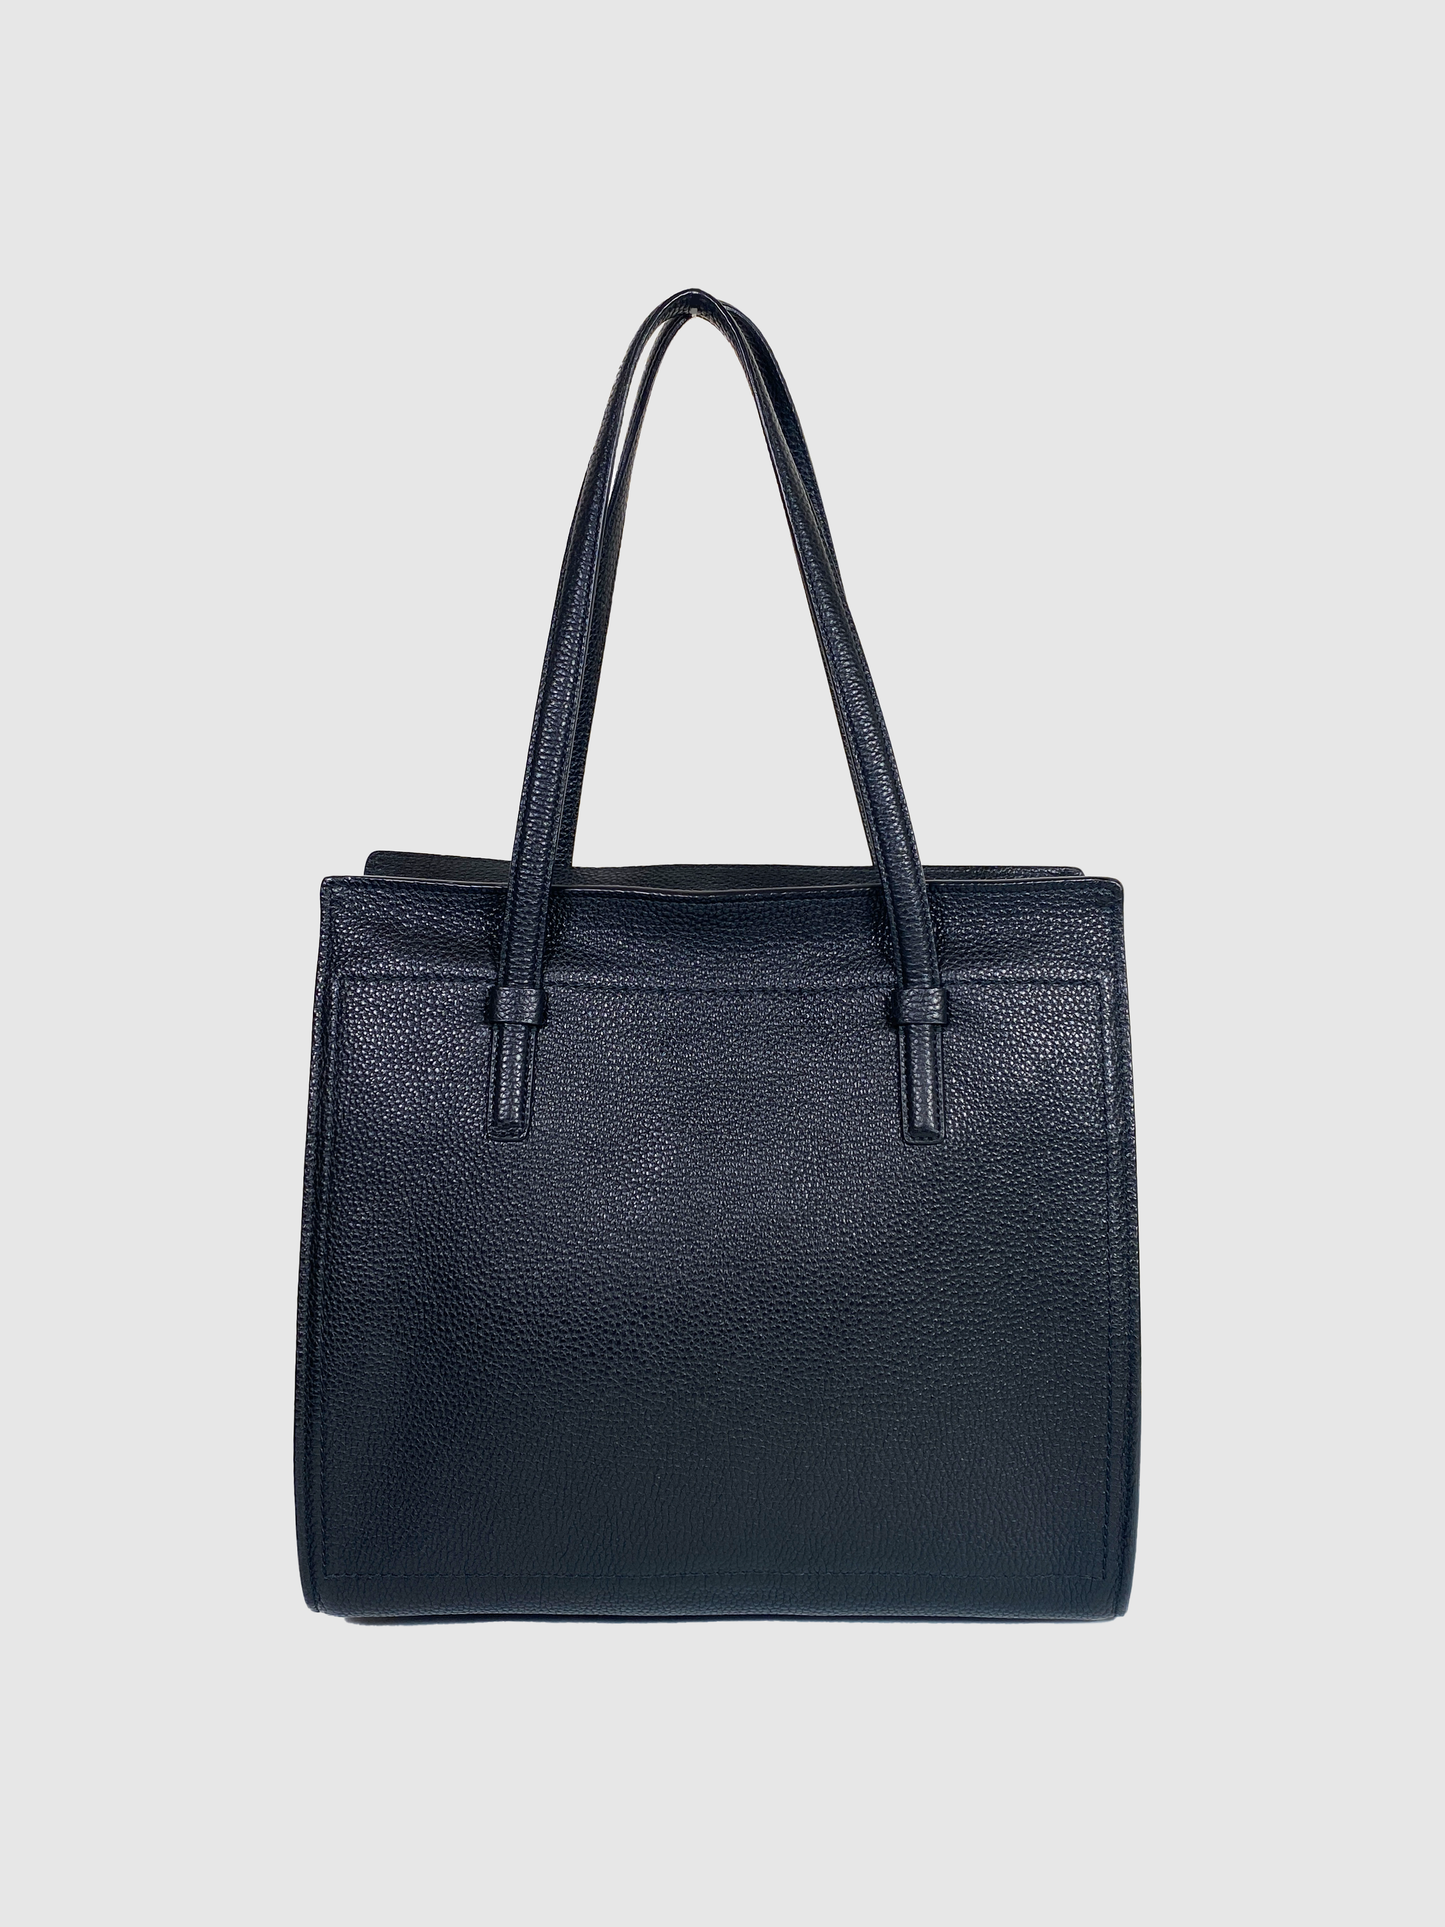 Salvatore Ferragamo Black Pebbled Leather Double Handle Bag